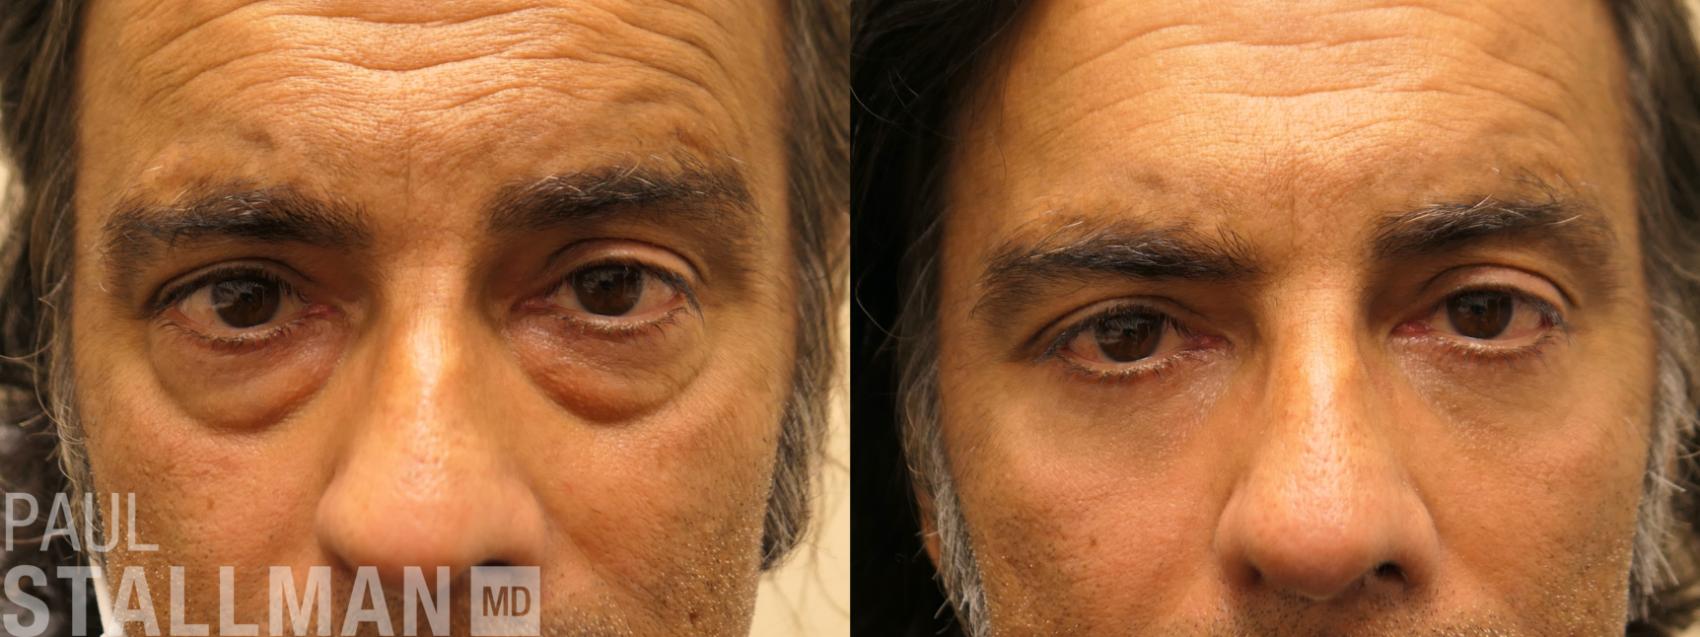 Before & After Blepharoplasty for Men Case 156 Front View in Fresno, Santa Maria, San Luis Obispo, CA